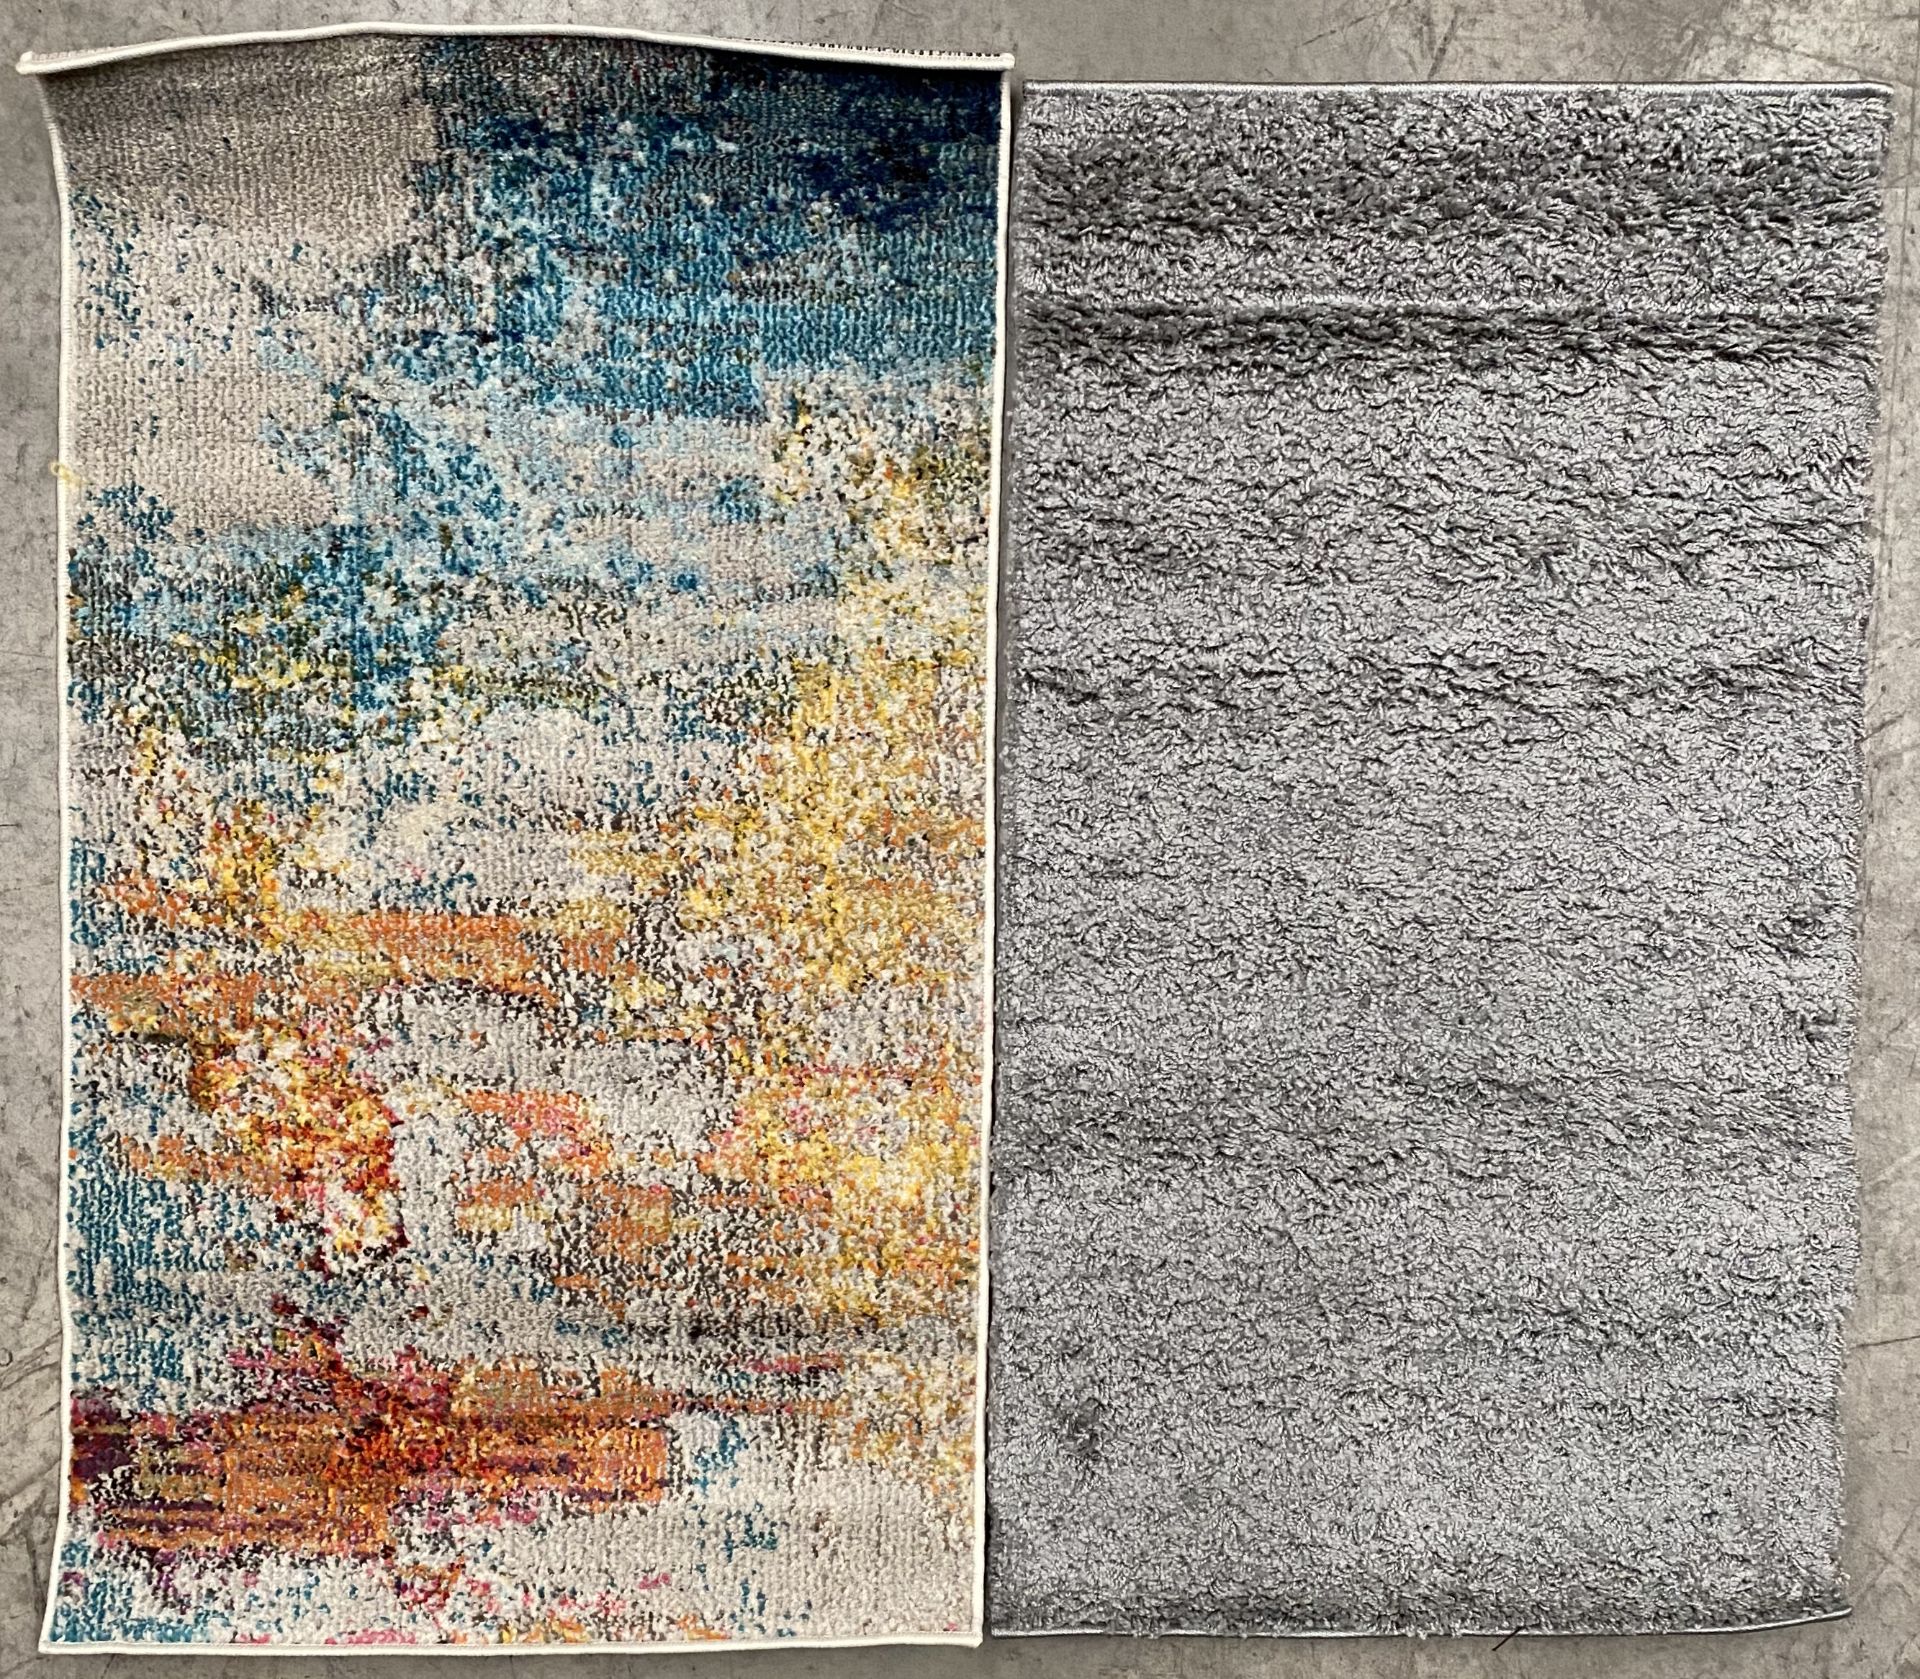 A Retro shaggy grey rug - 60cm x 110cm and a Nourison Celestial Collection Sealife rug - 66cm x